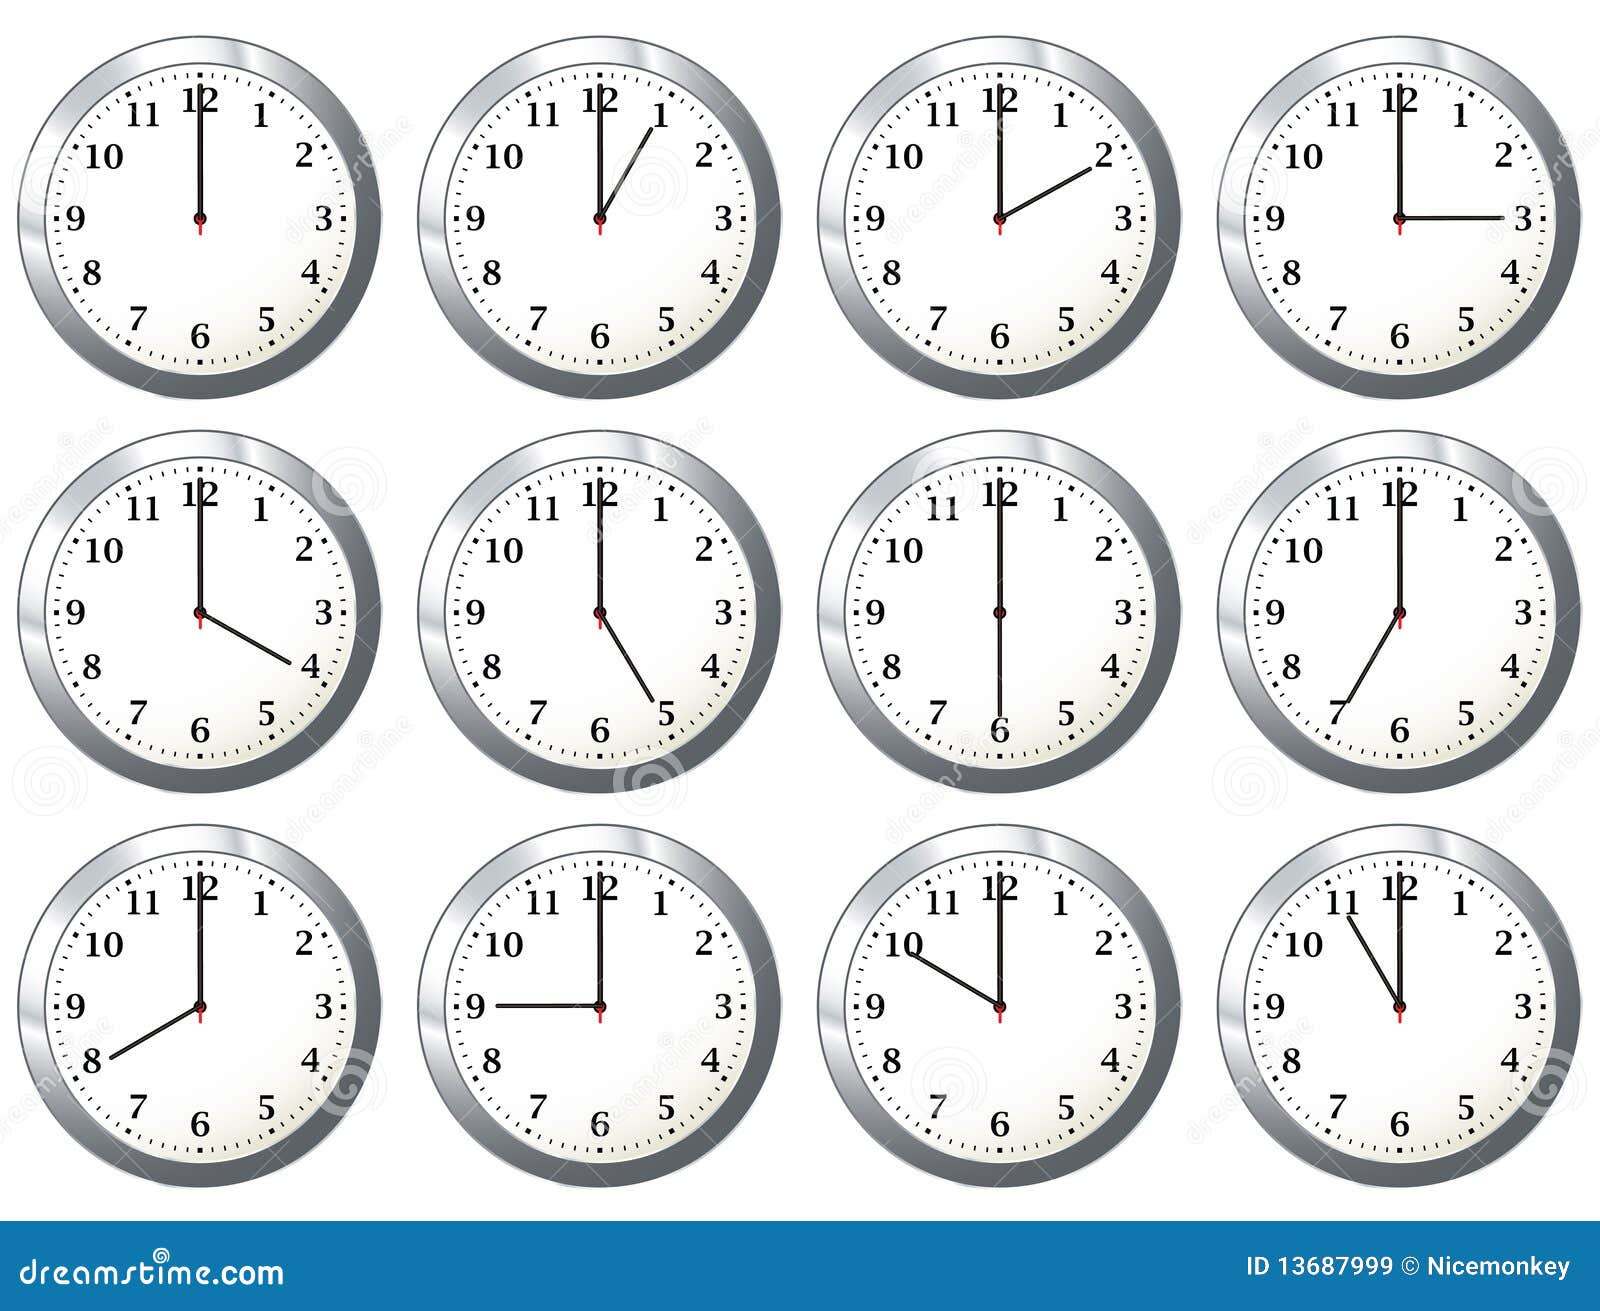 Office clock all times stock illustration. Illustration of